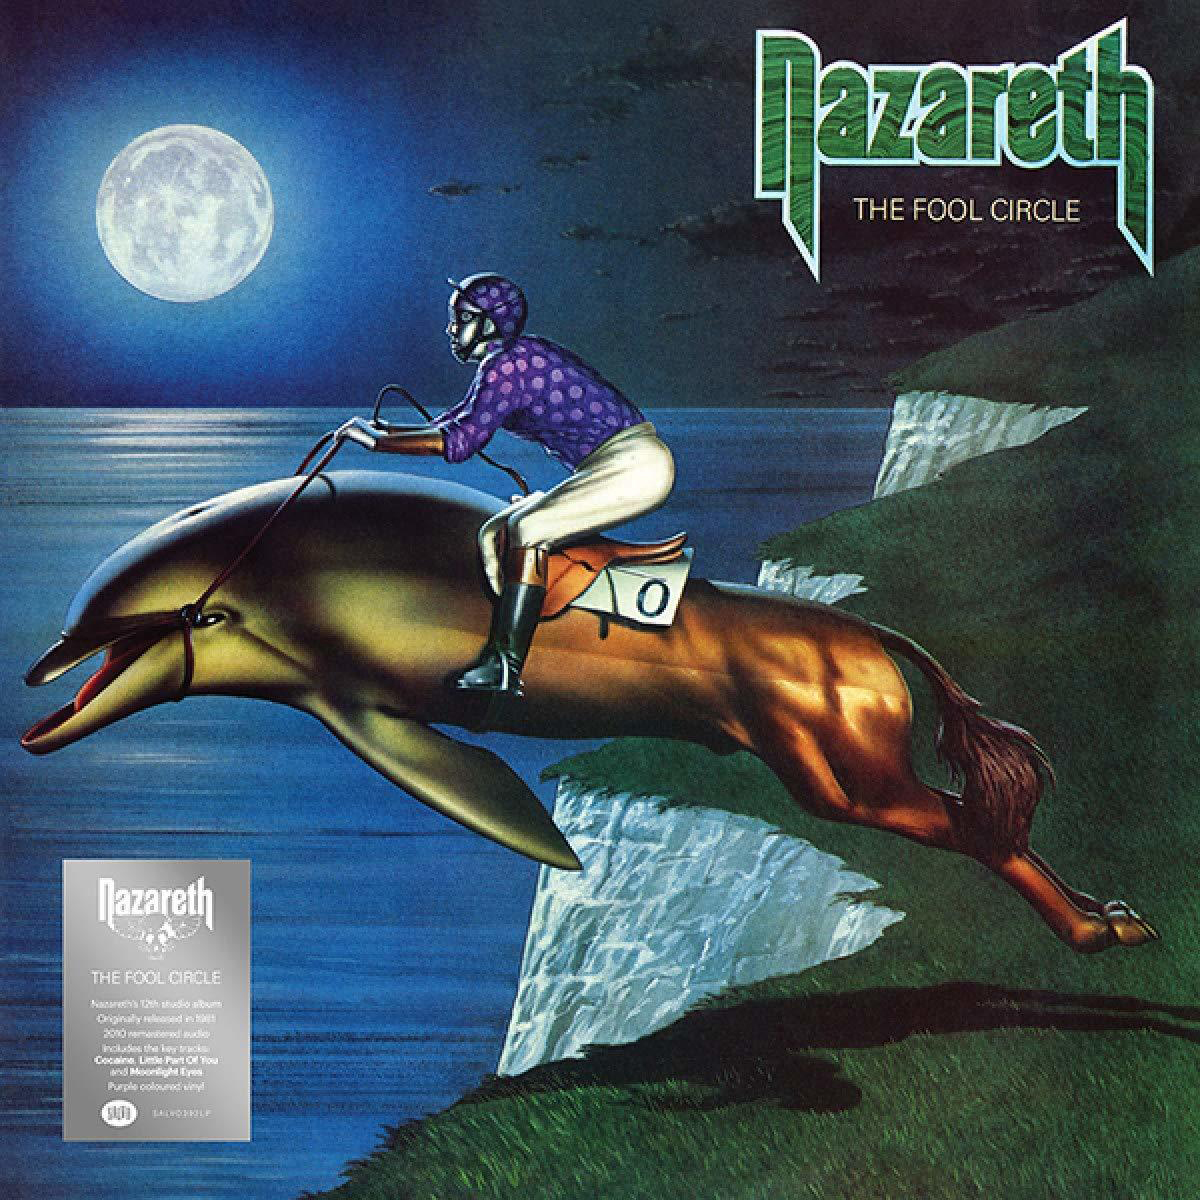 Vinyl) (Purple Fool (Vinyl) Circle - The Nazareth -